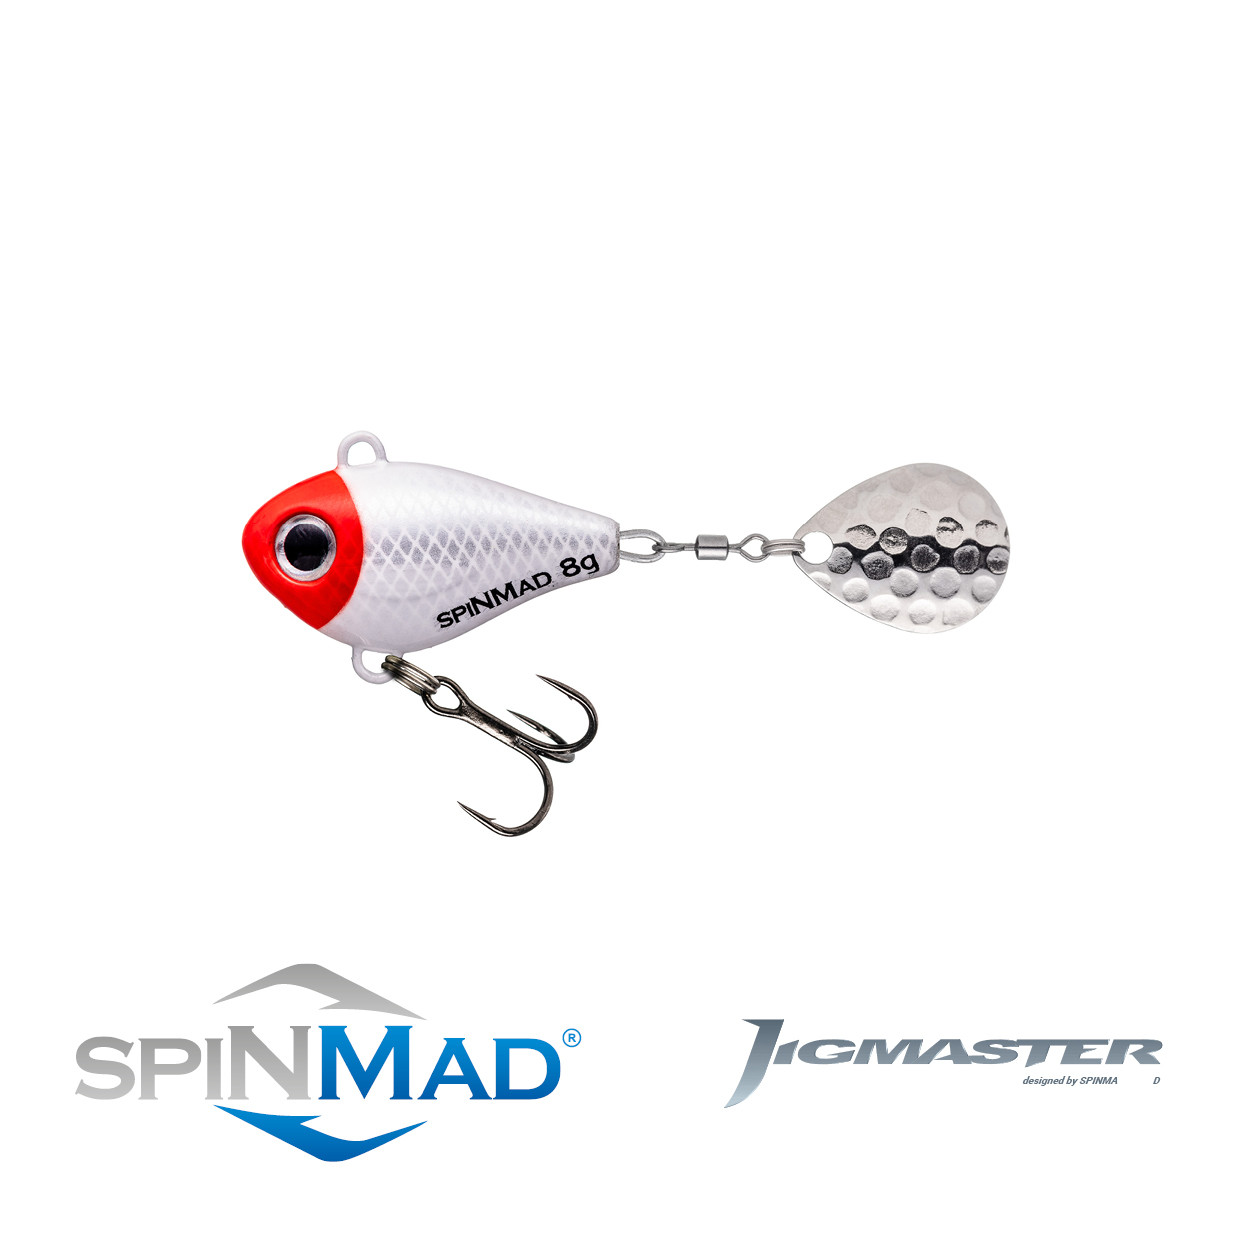 Spinmad Spinnertail Jigmaster 8Gr - 2312